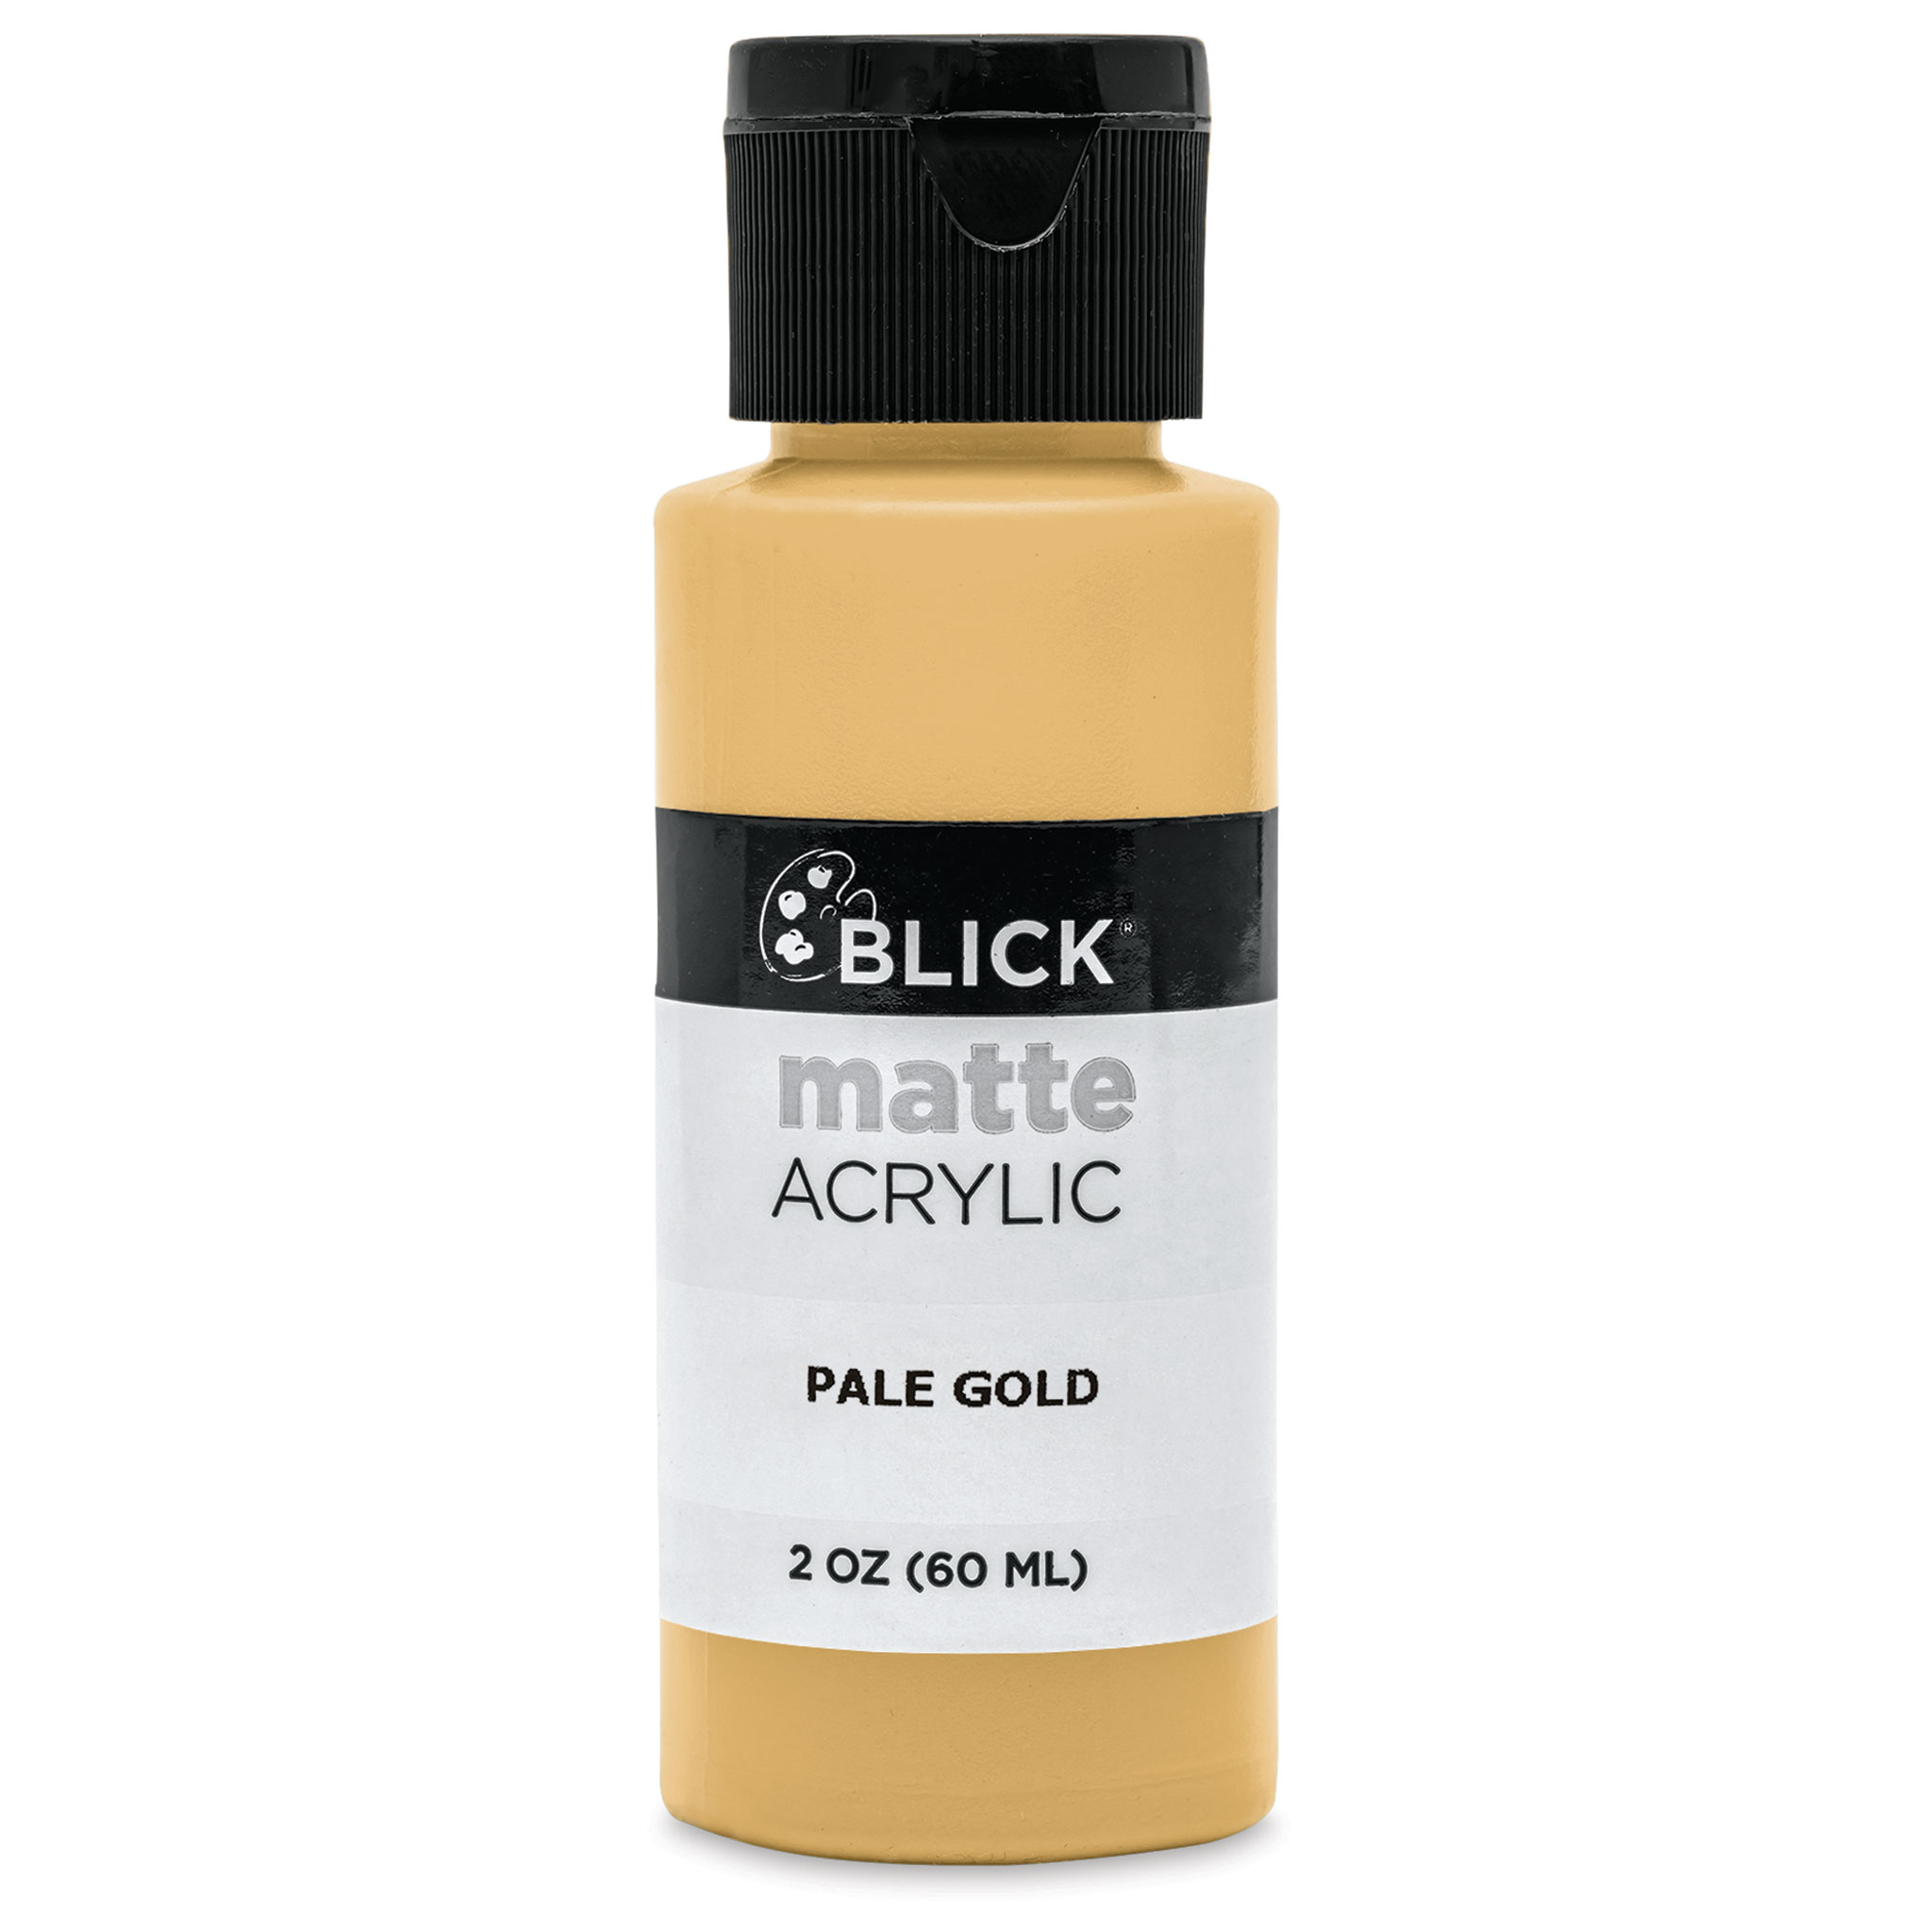 Blick Matte Acrylic - Pale Gold, 2 oz bottle